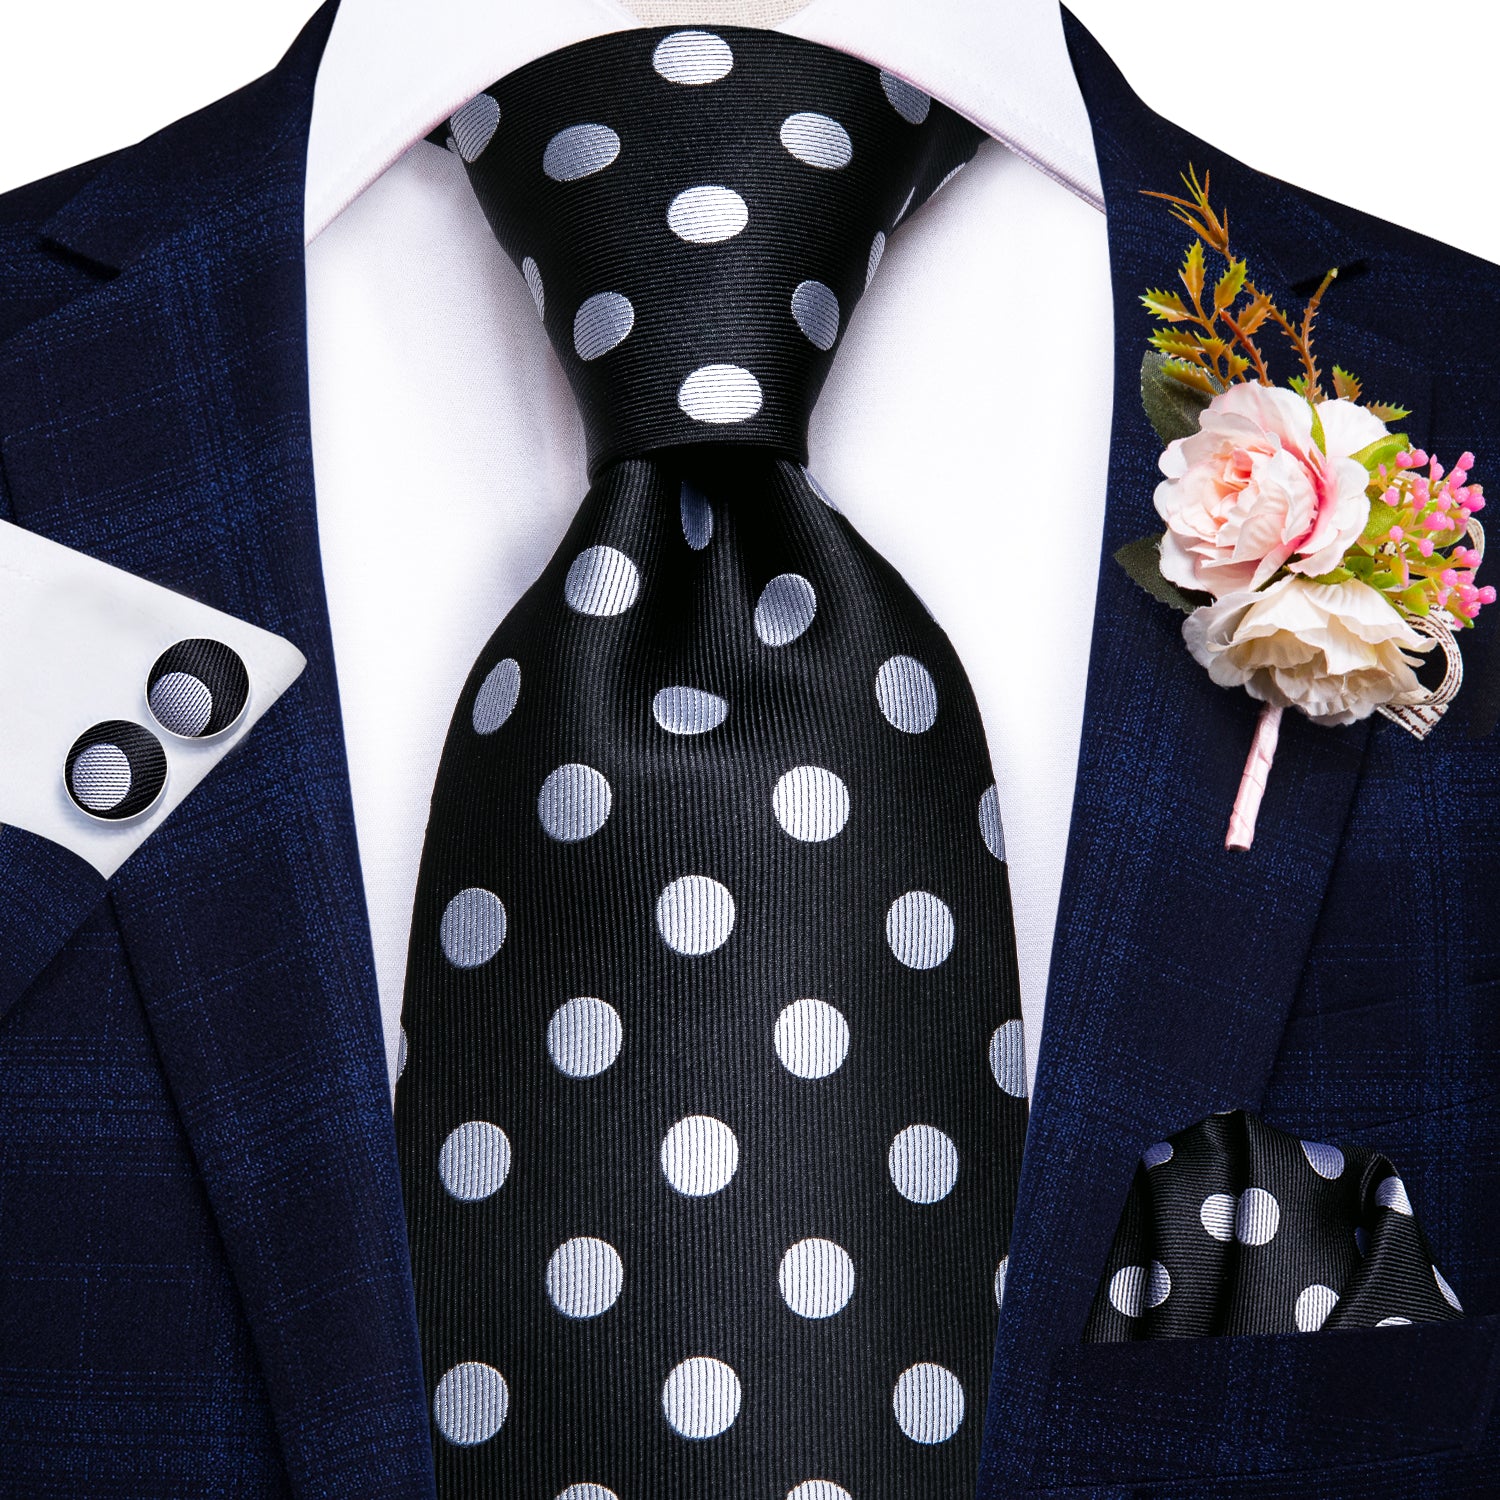 Classic Black White Polka Dot Tie Handkerchief Cufflinks Set with Wedding Brooch